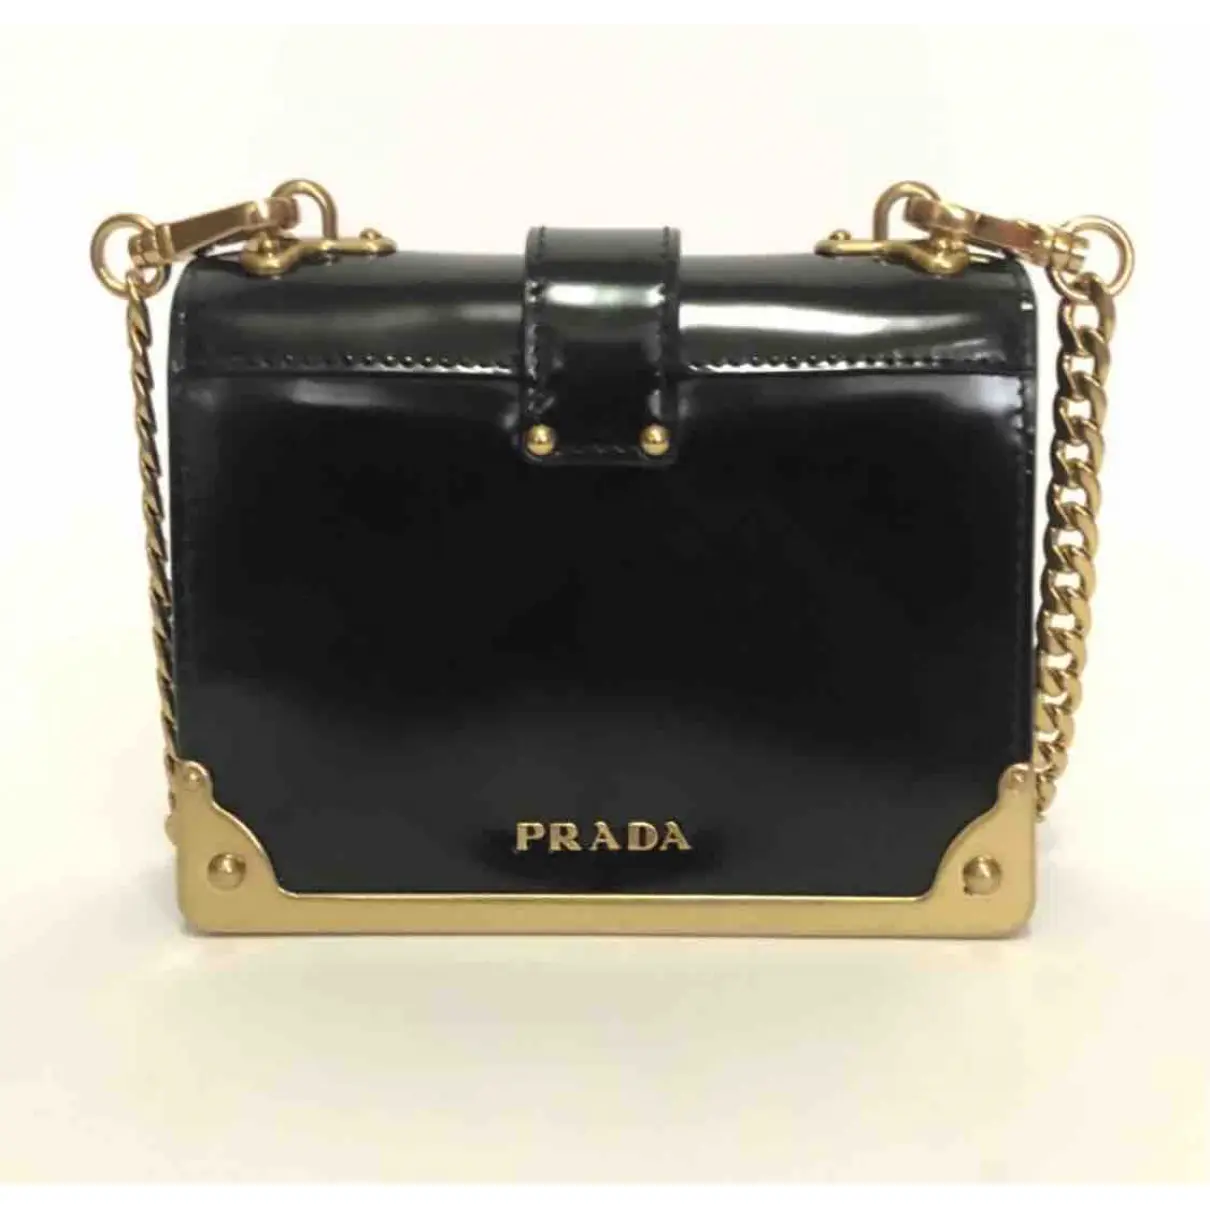 Cahier patent leather crossbody bag Prada